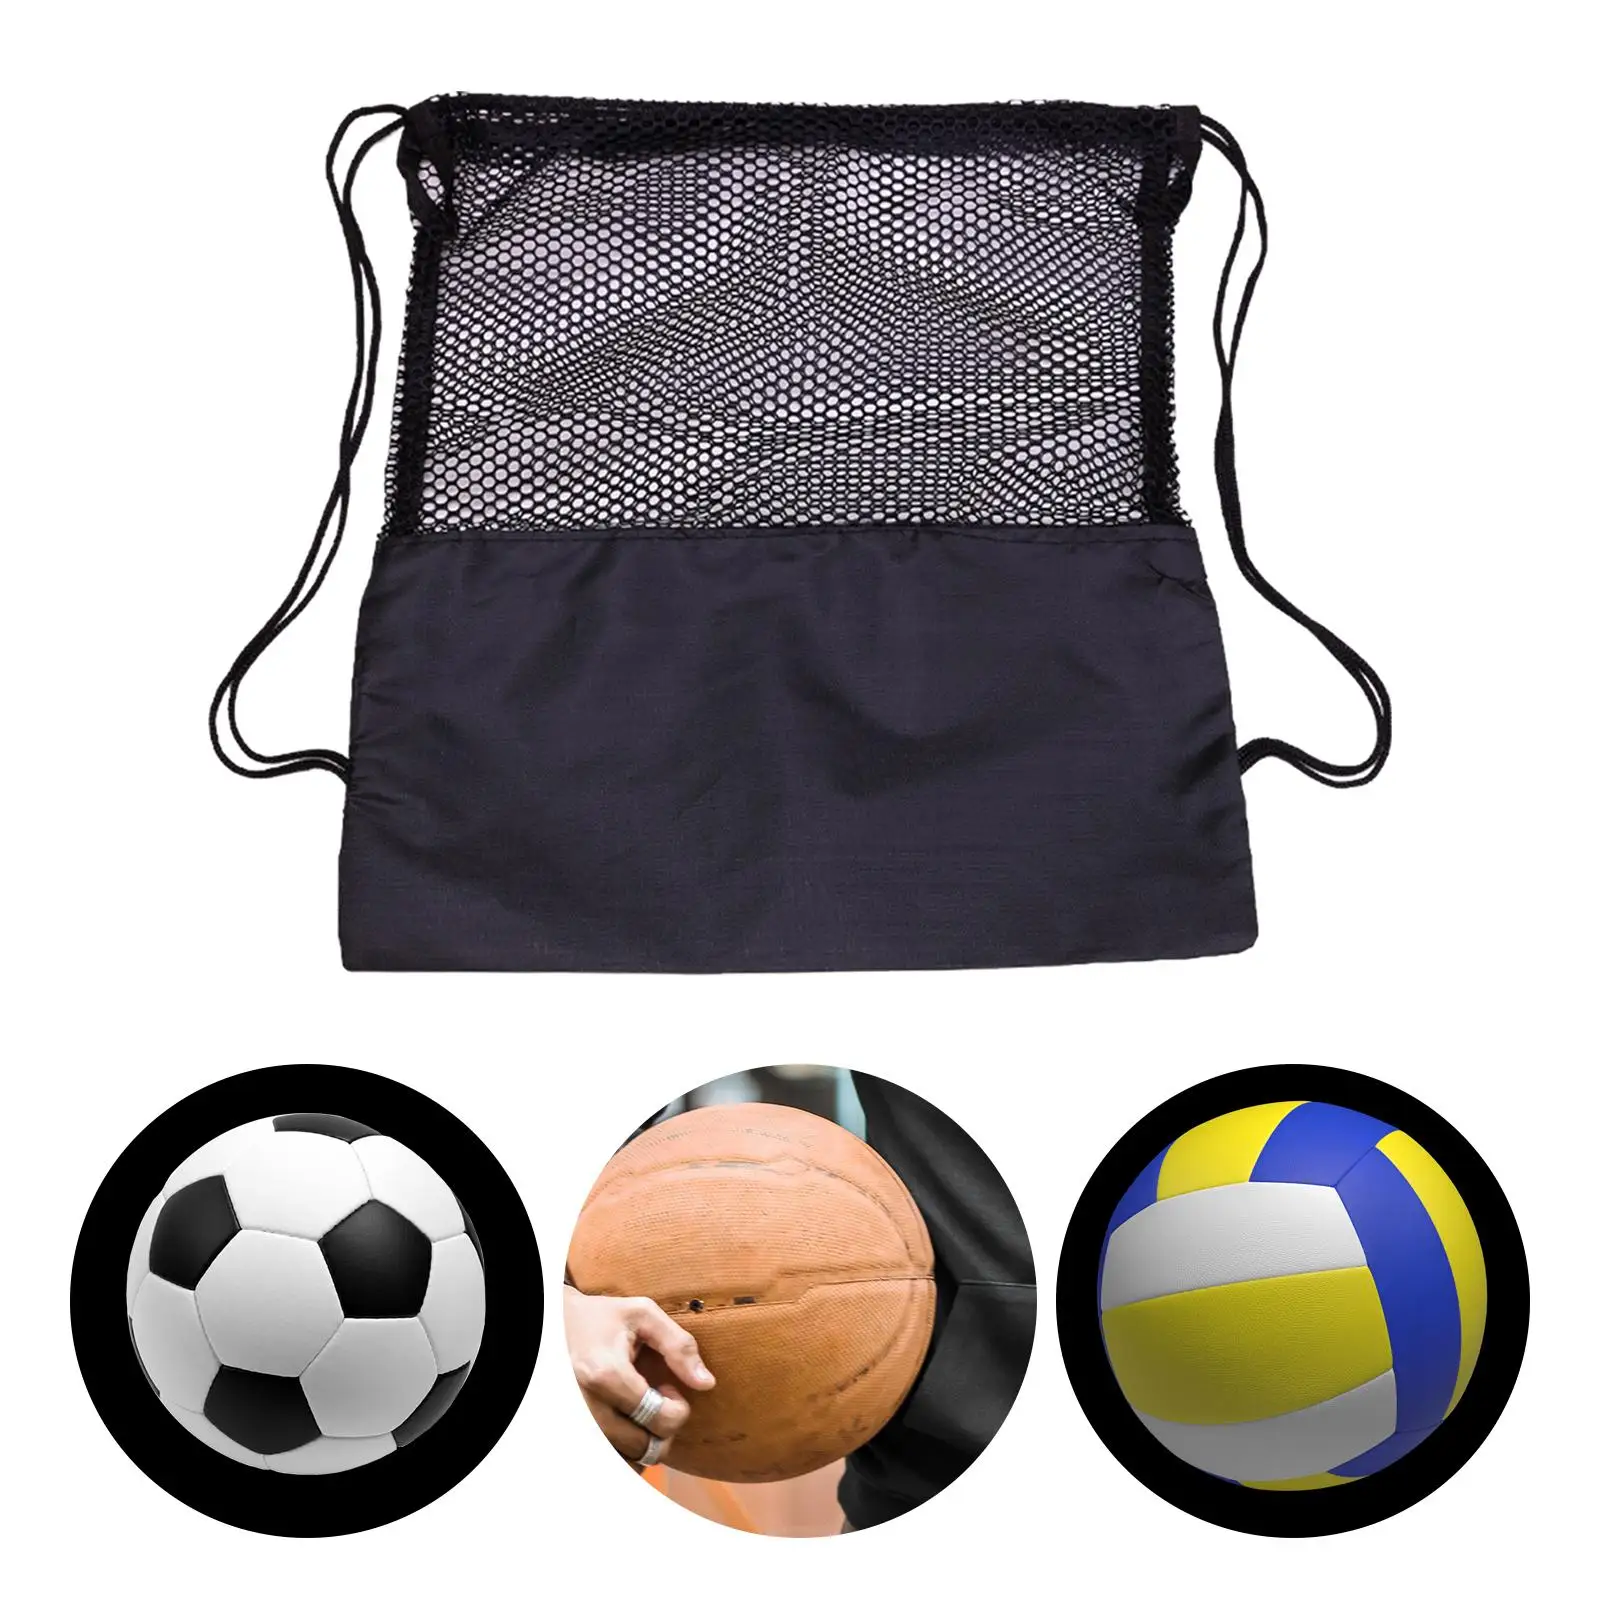 Drawstring Backpack Durable Oxford Cloth Gym Bag Black Portable Basketball Mesh Bag for Football Swimming Travel Rugby Softball